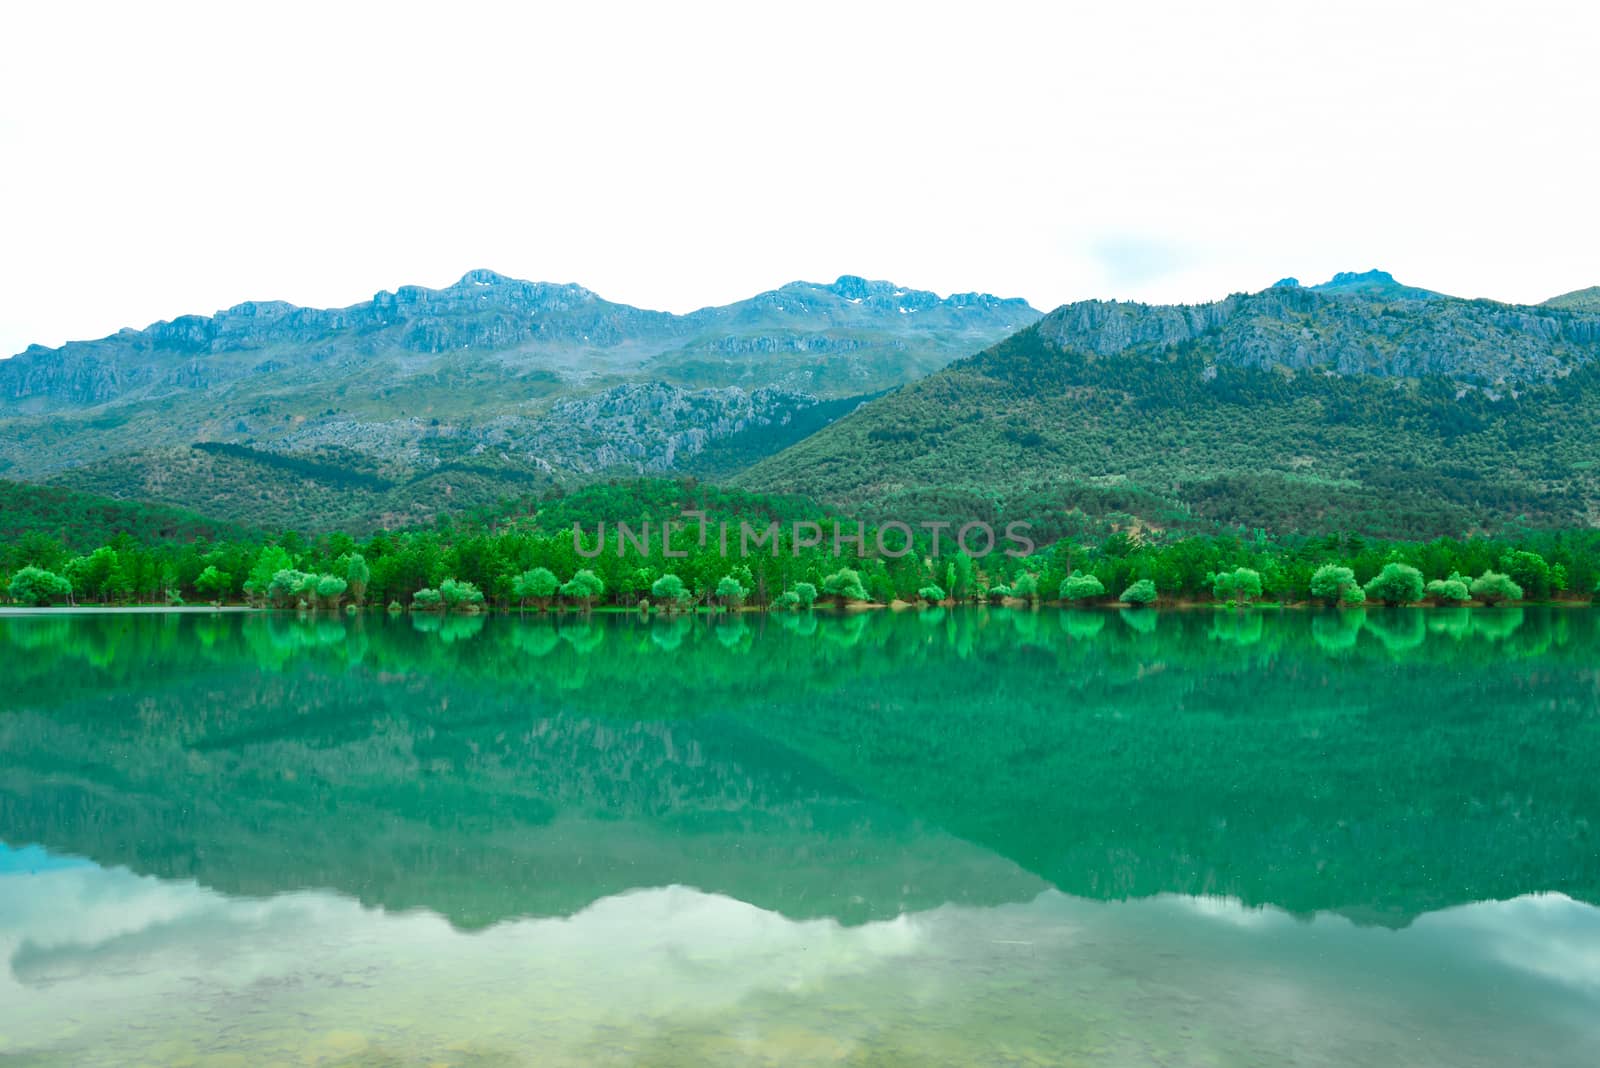 wonderful reflections on the lake by crazymedia007